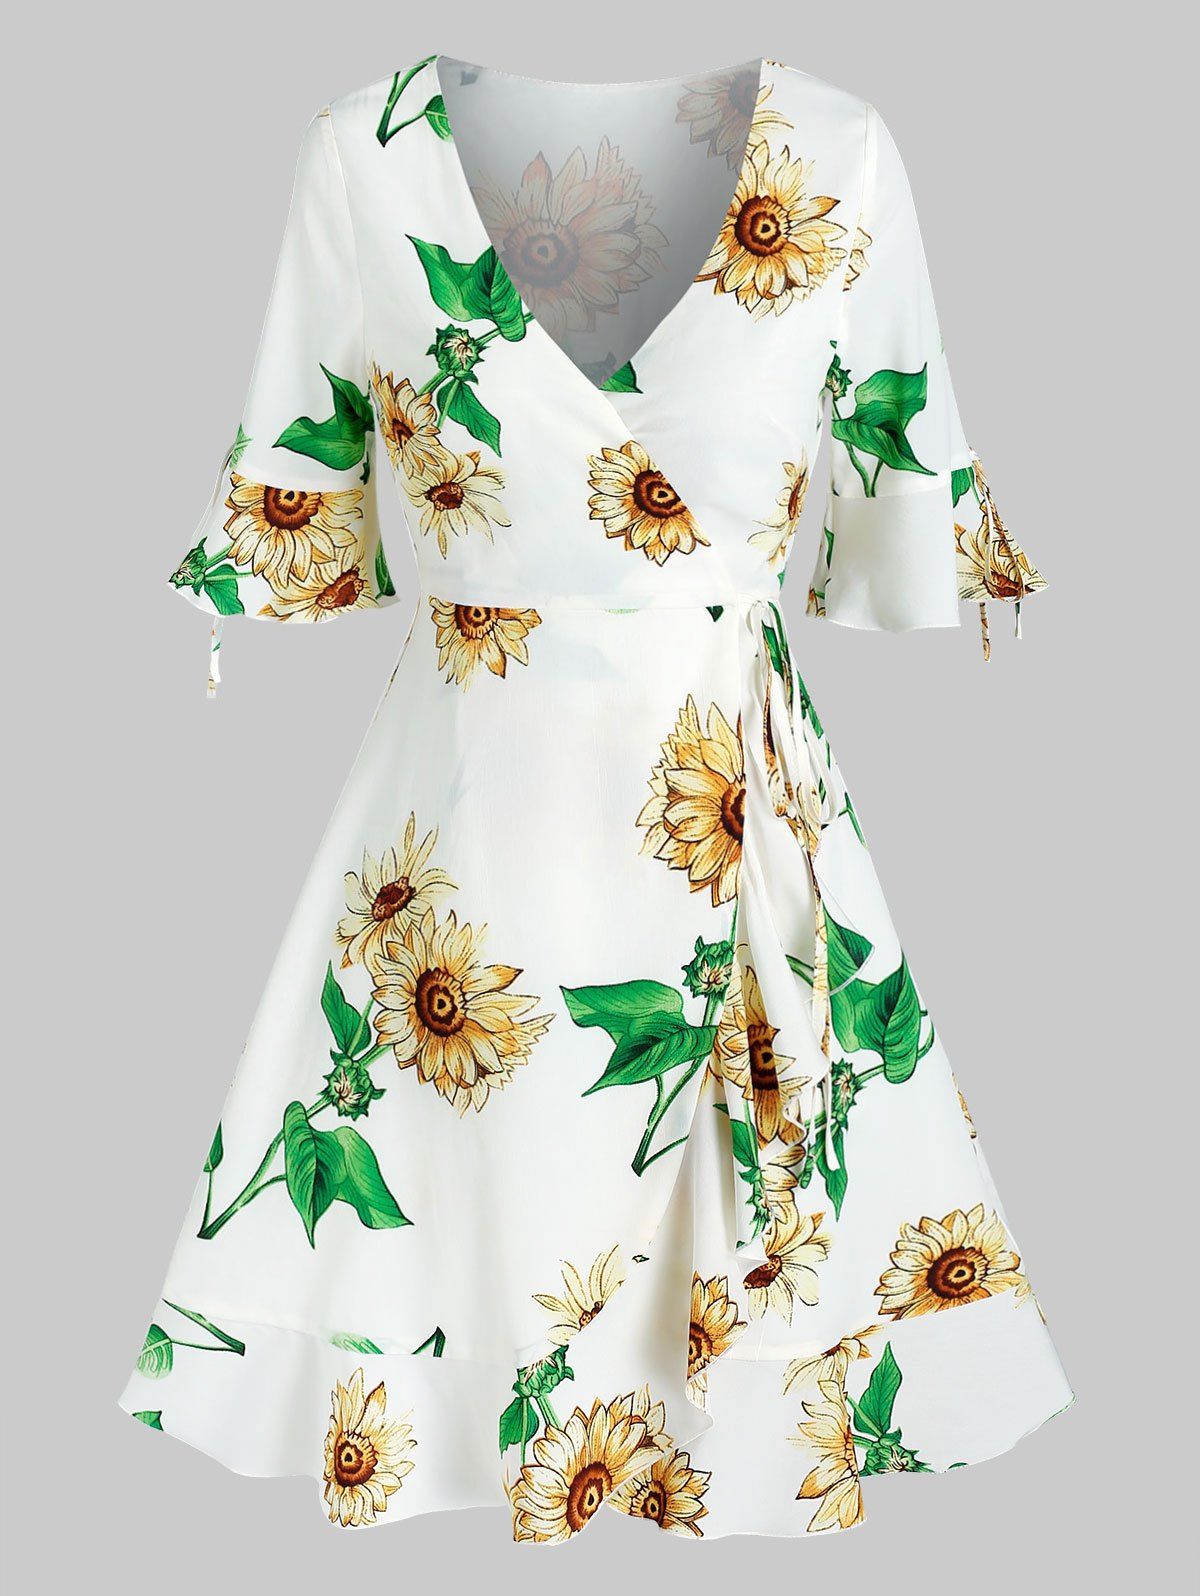 Bell Sleeve Low Cut Floral Print Wrap Dress - WHITE XXXL